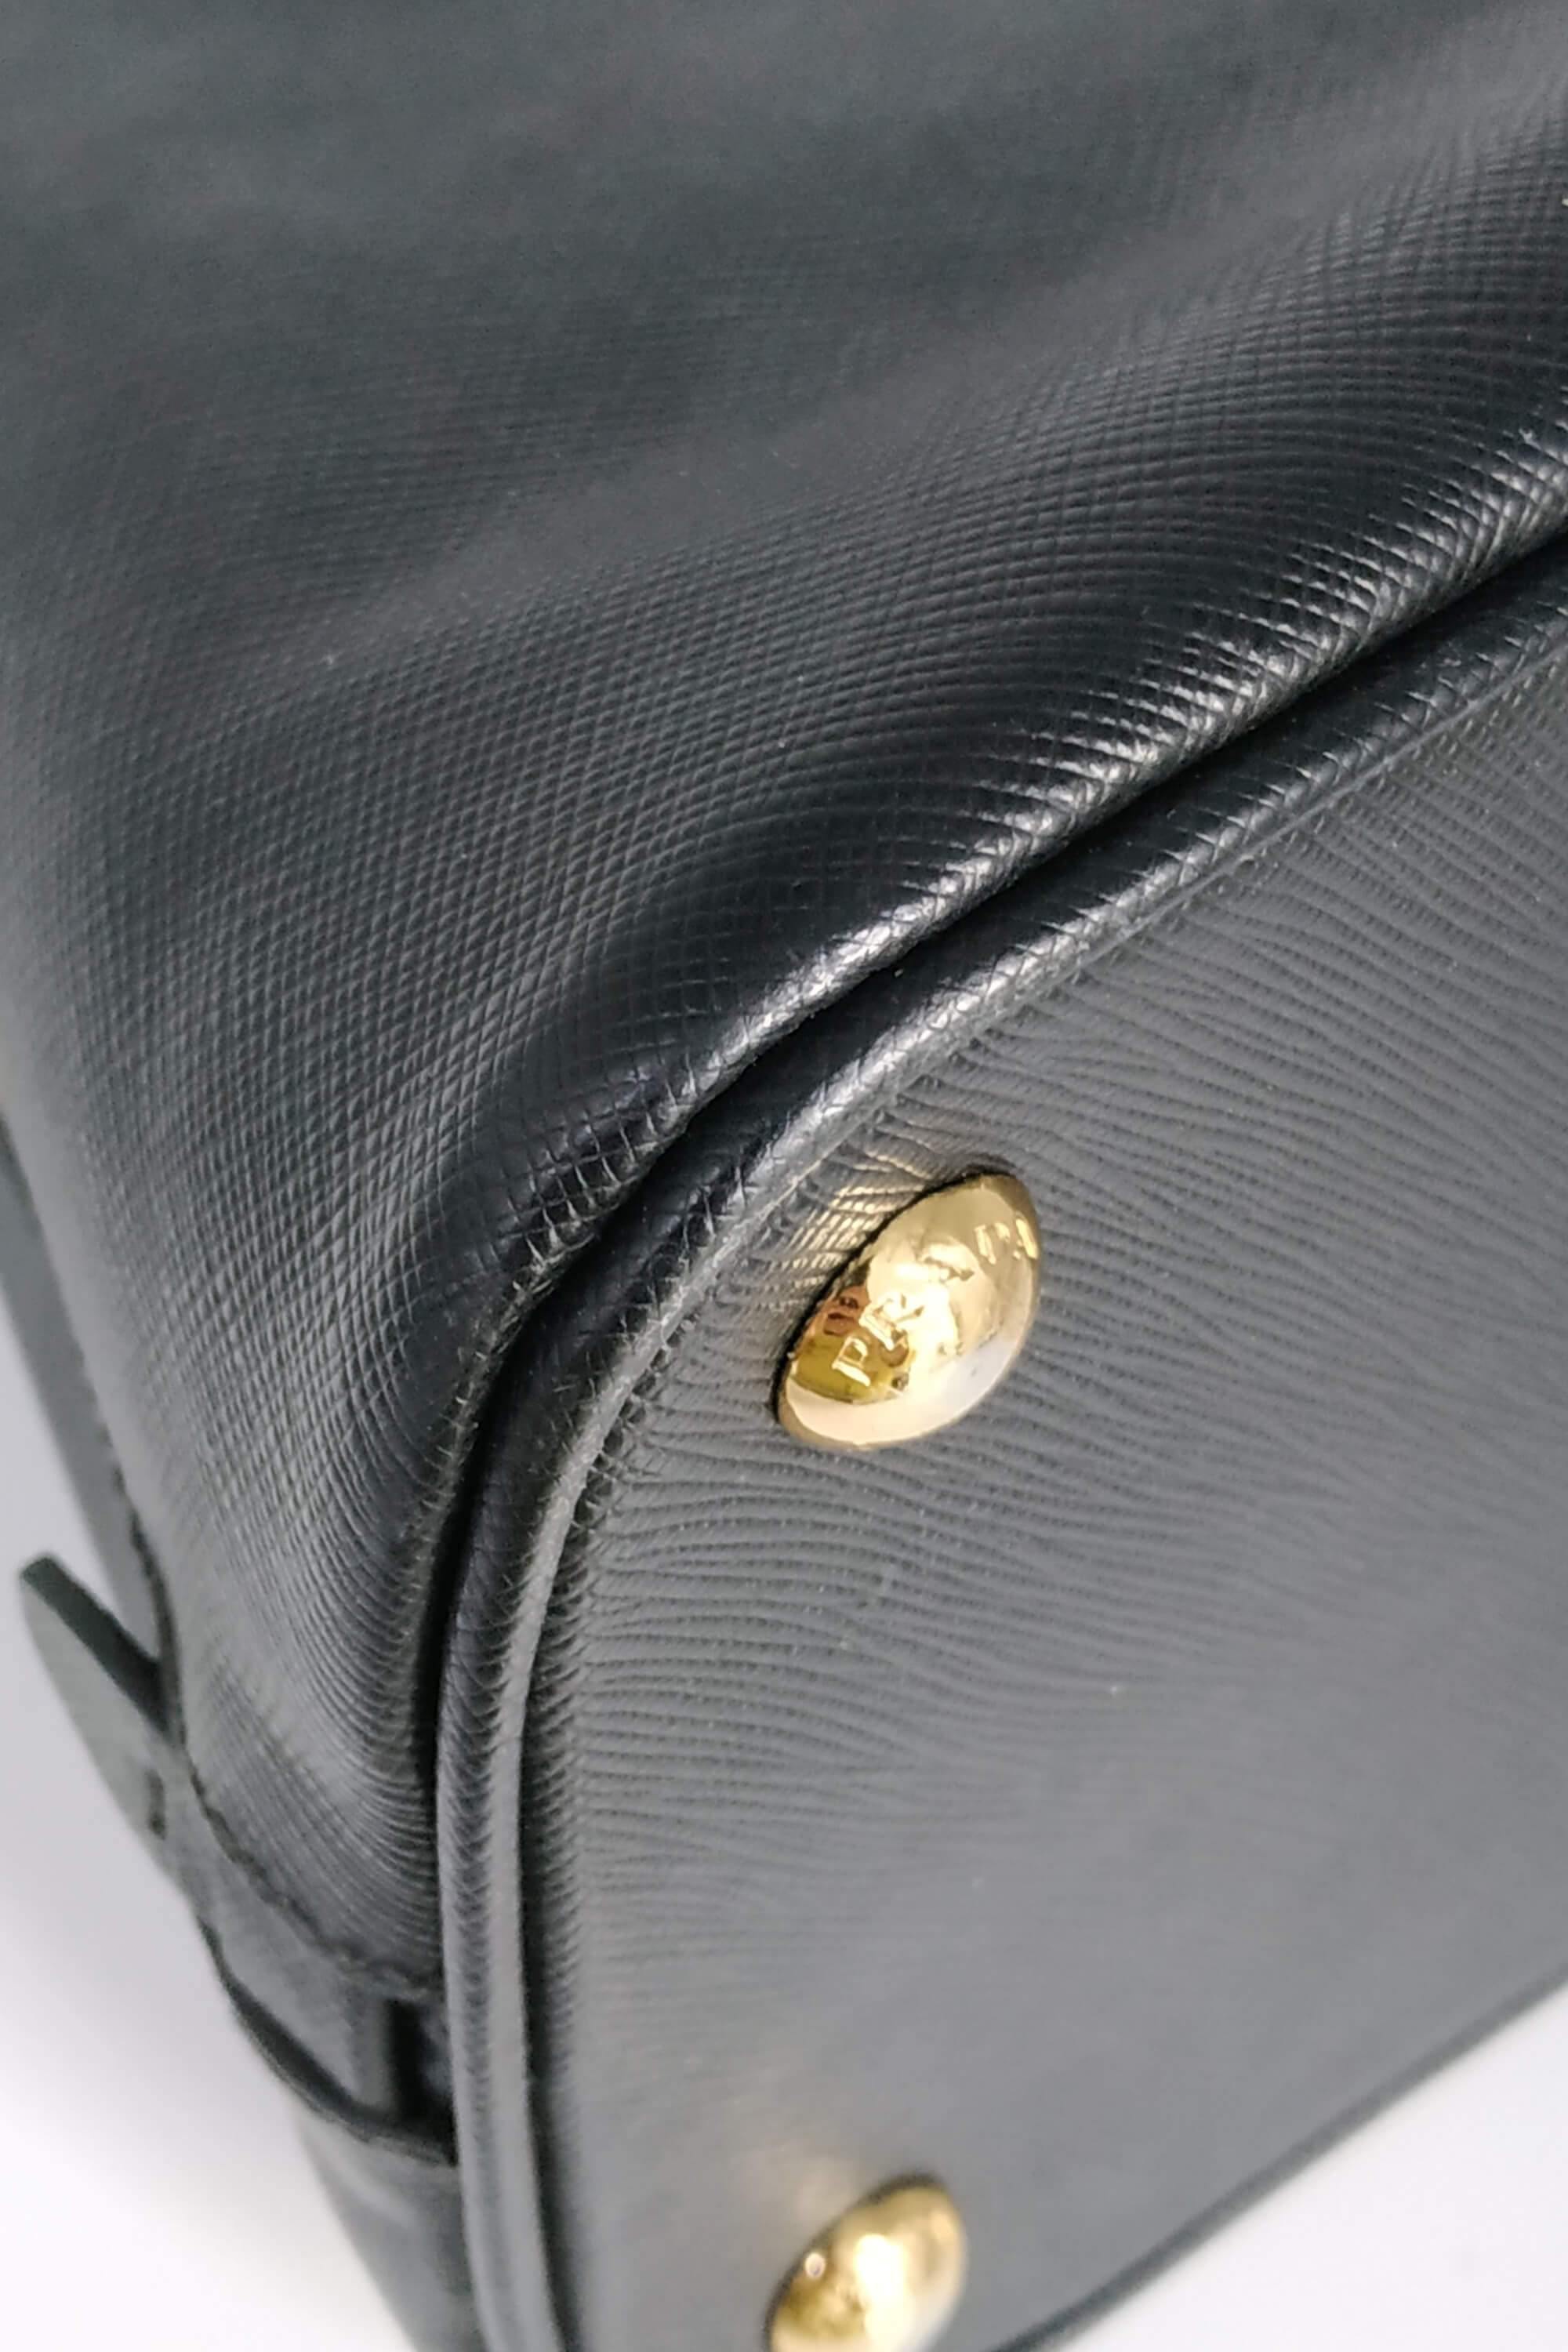 Saffiano Lux Promenade Small – Keeks Designer Handbags